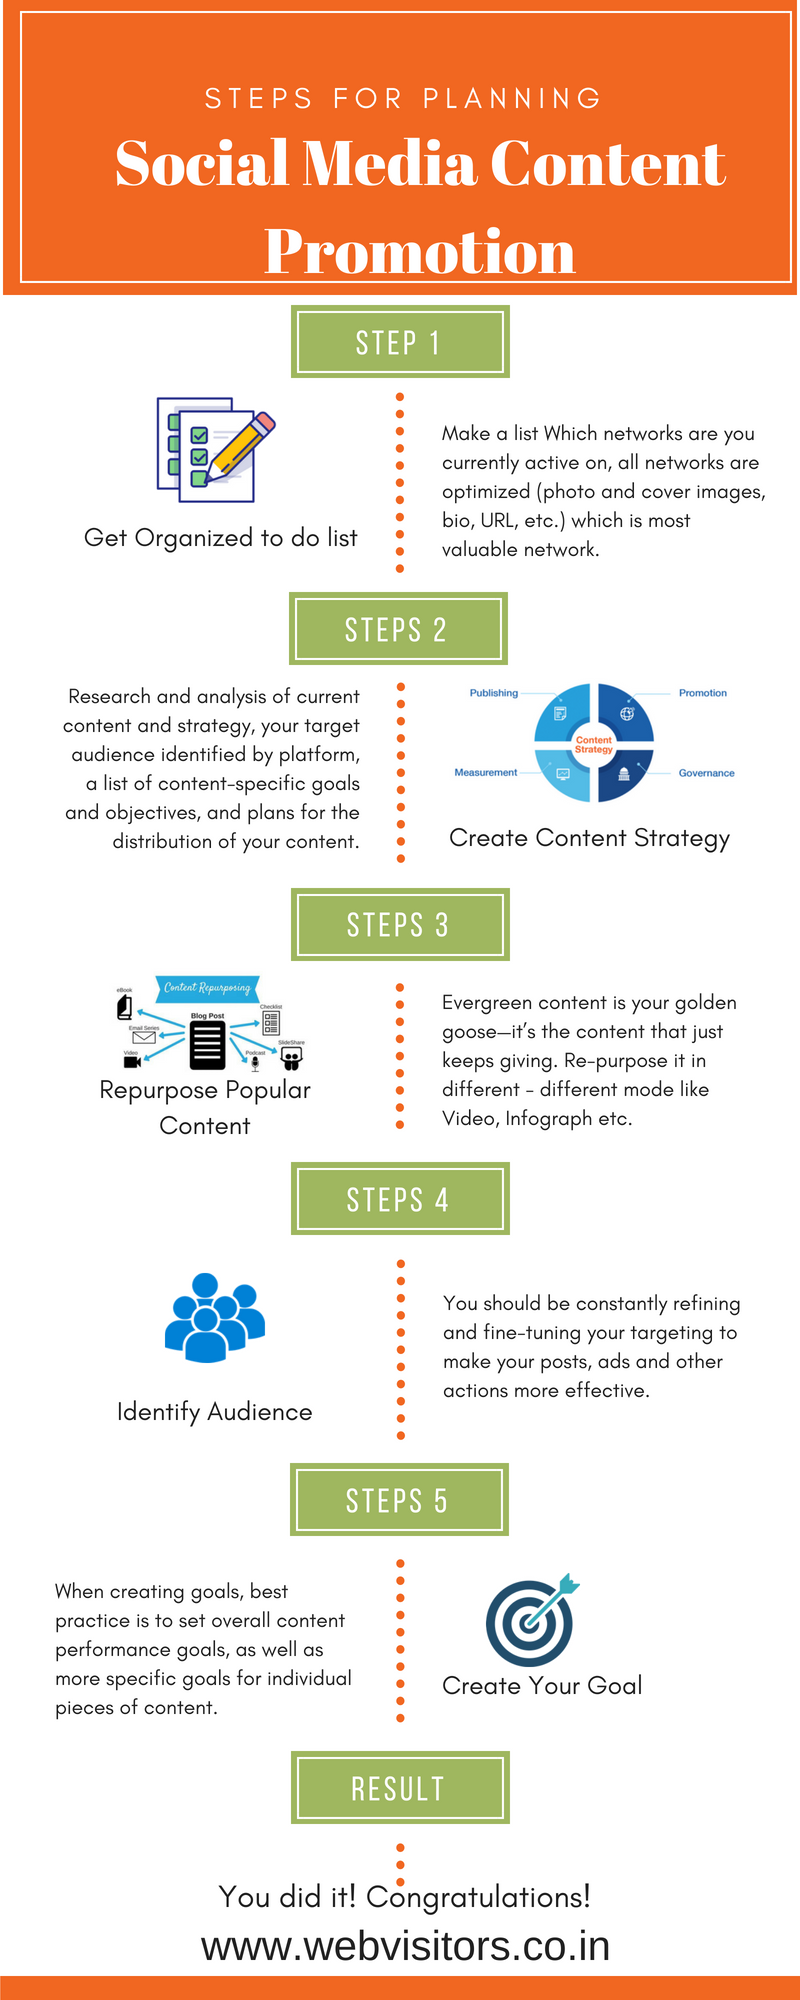 Social Media Content Promotion Steps